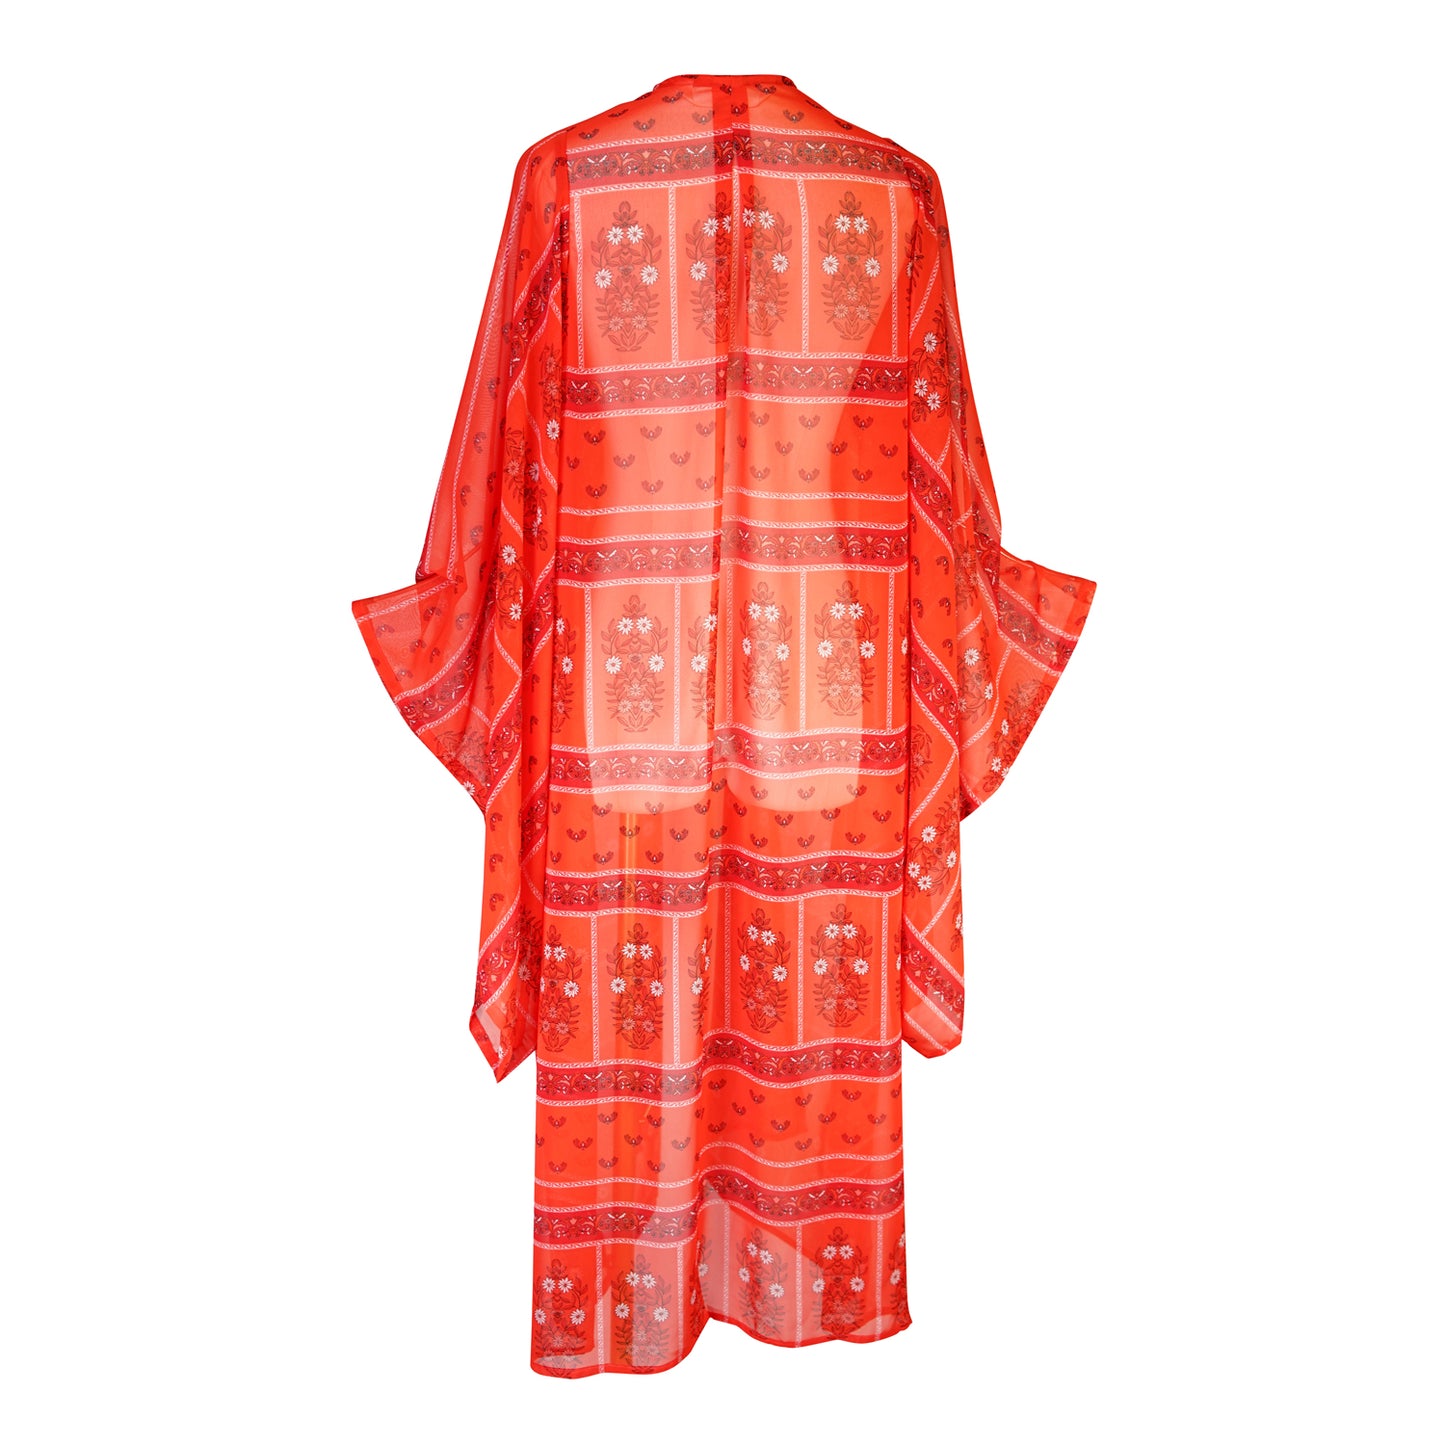 jennafer grace Rioja kimono orange red-orange scarf print semi-sheer coverup wrap dress with pockets duster jacket robe boho bohemian hippie whimsical romantic beach poolside resort cabana lounge wear unisex handmade in California USA